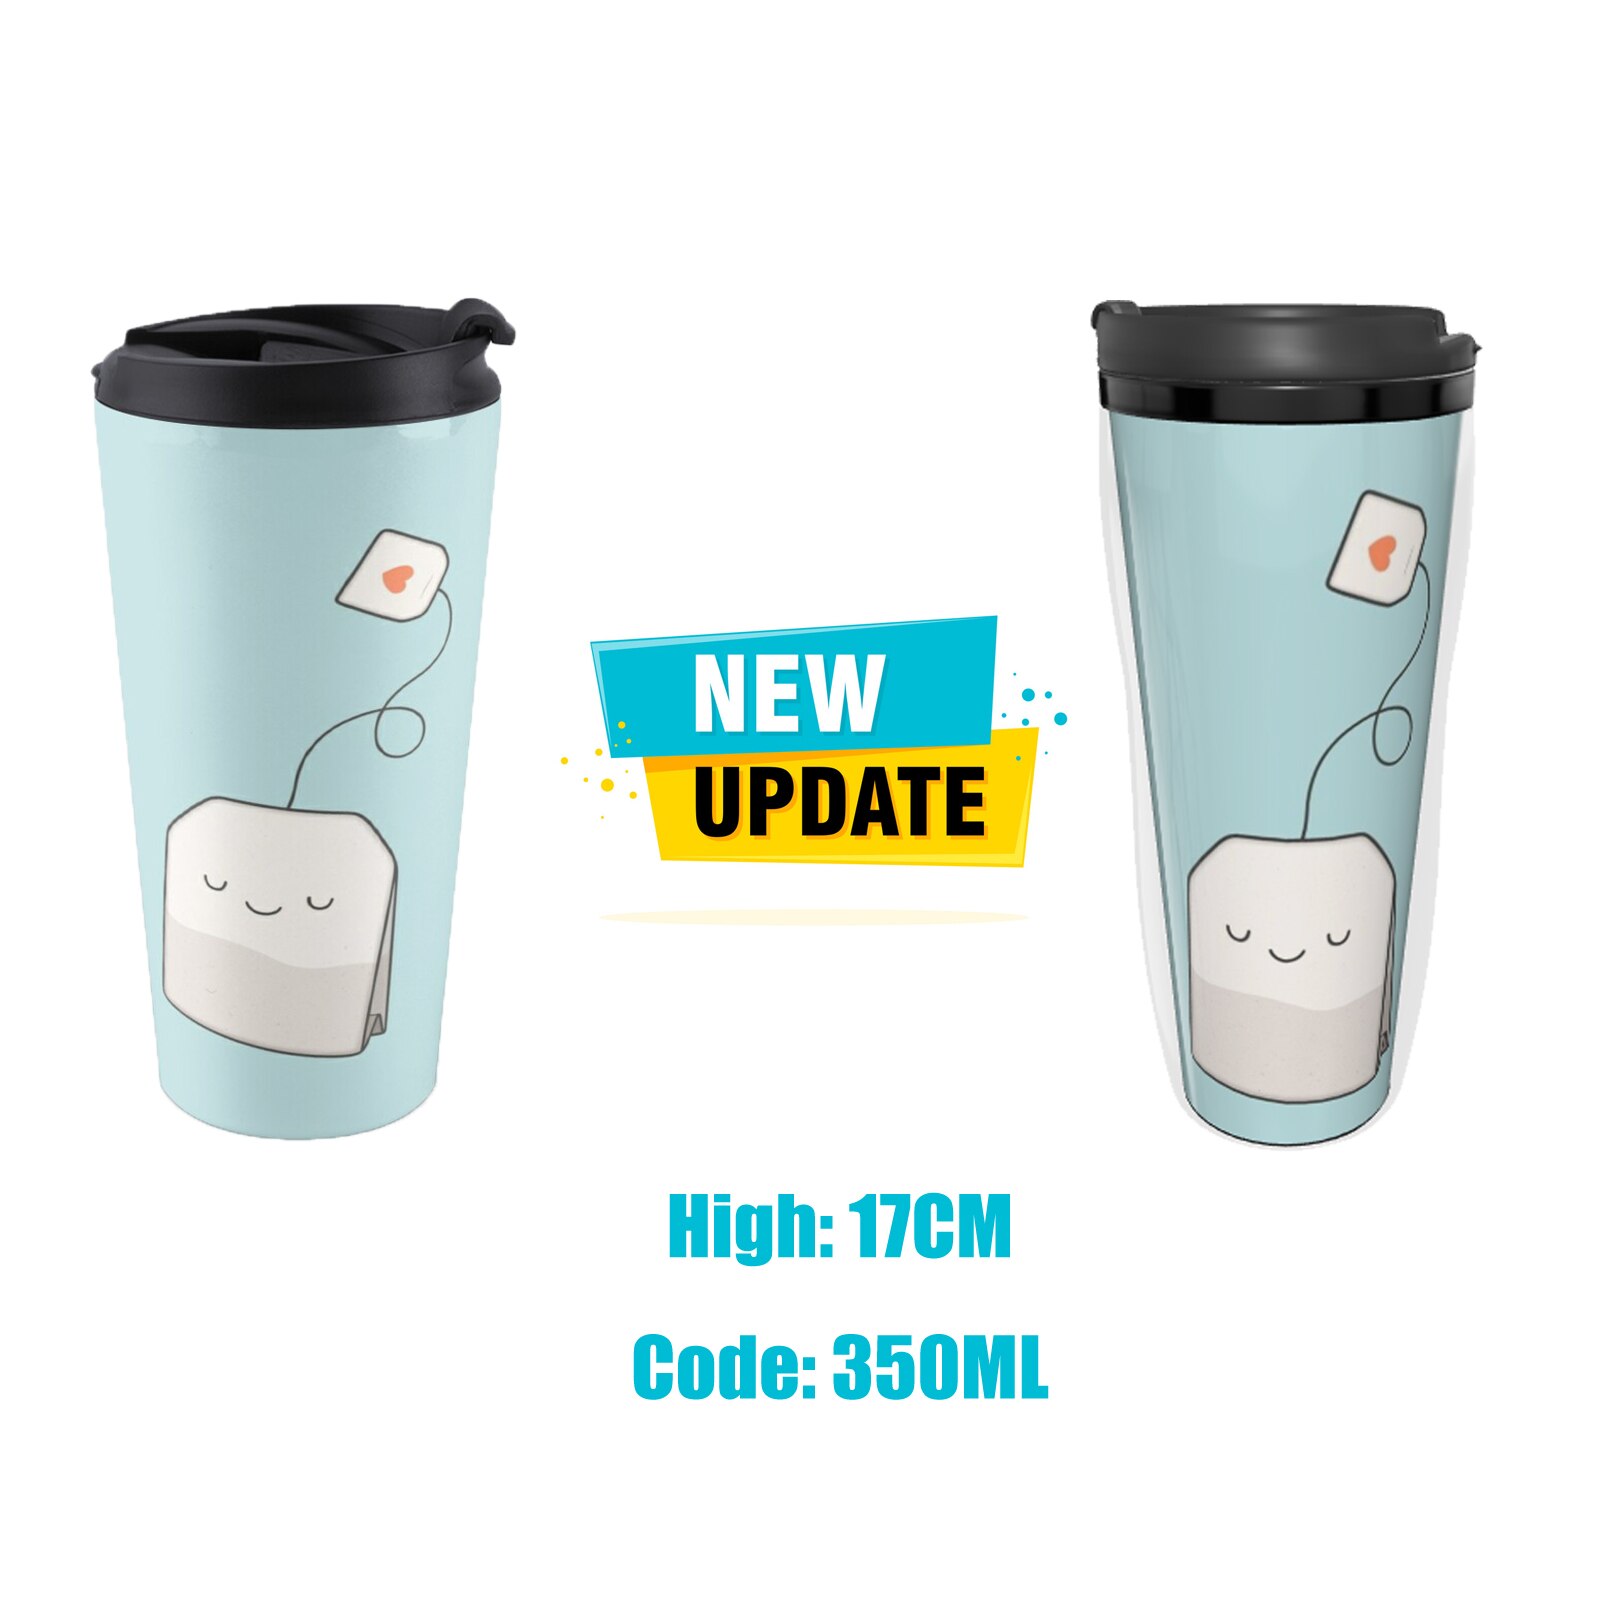 TGS Staff Logo Travel Coffee Mug Thermal Coffee Bottle